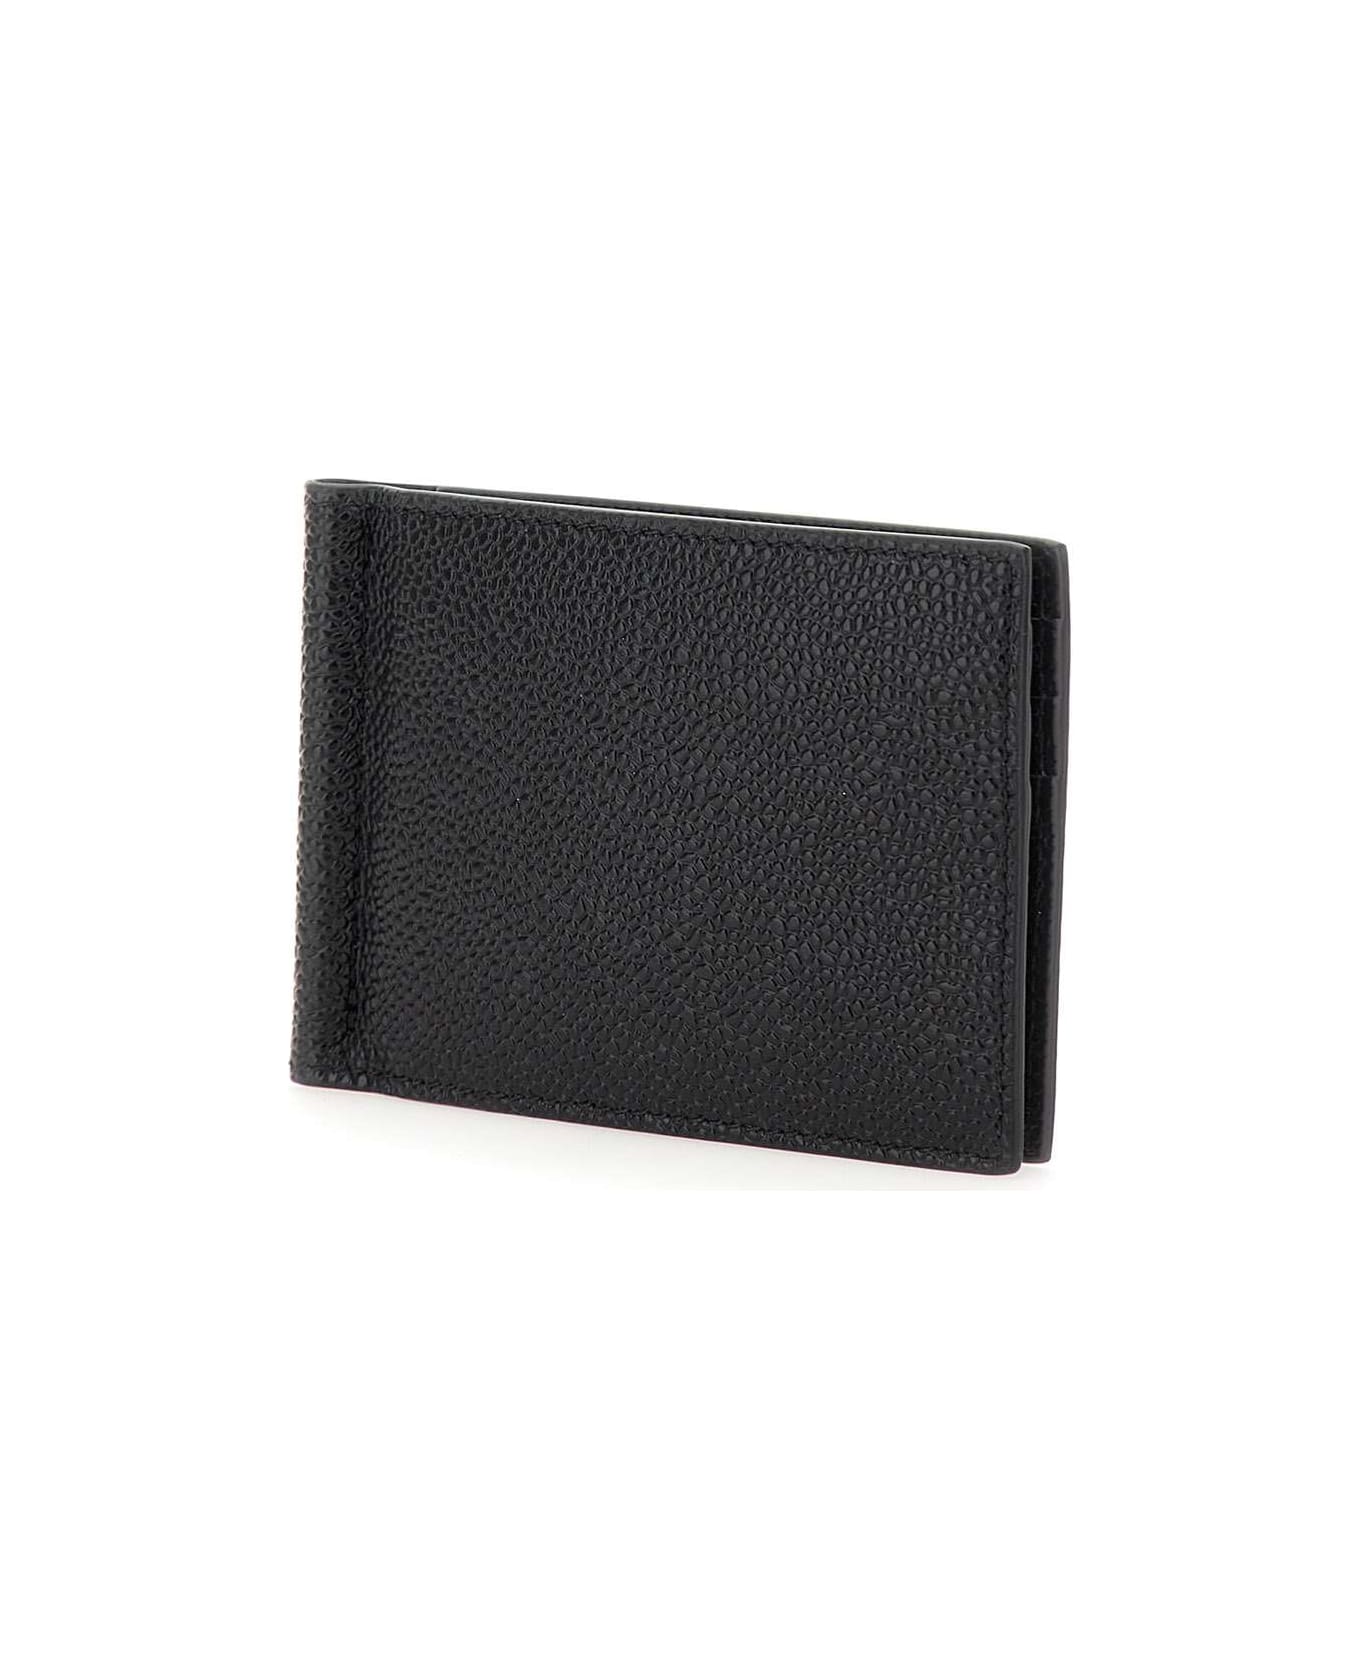 Thom Browne 'money Clip' Leather Wallet - Black 財布